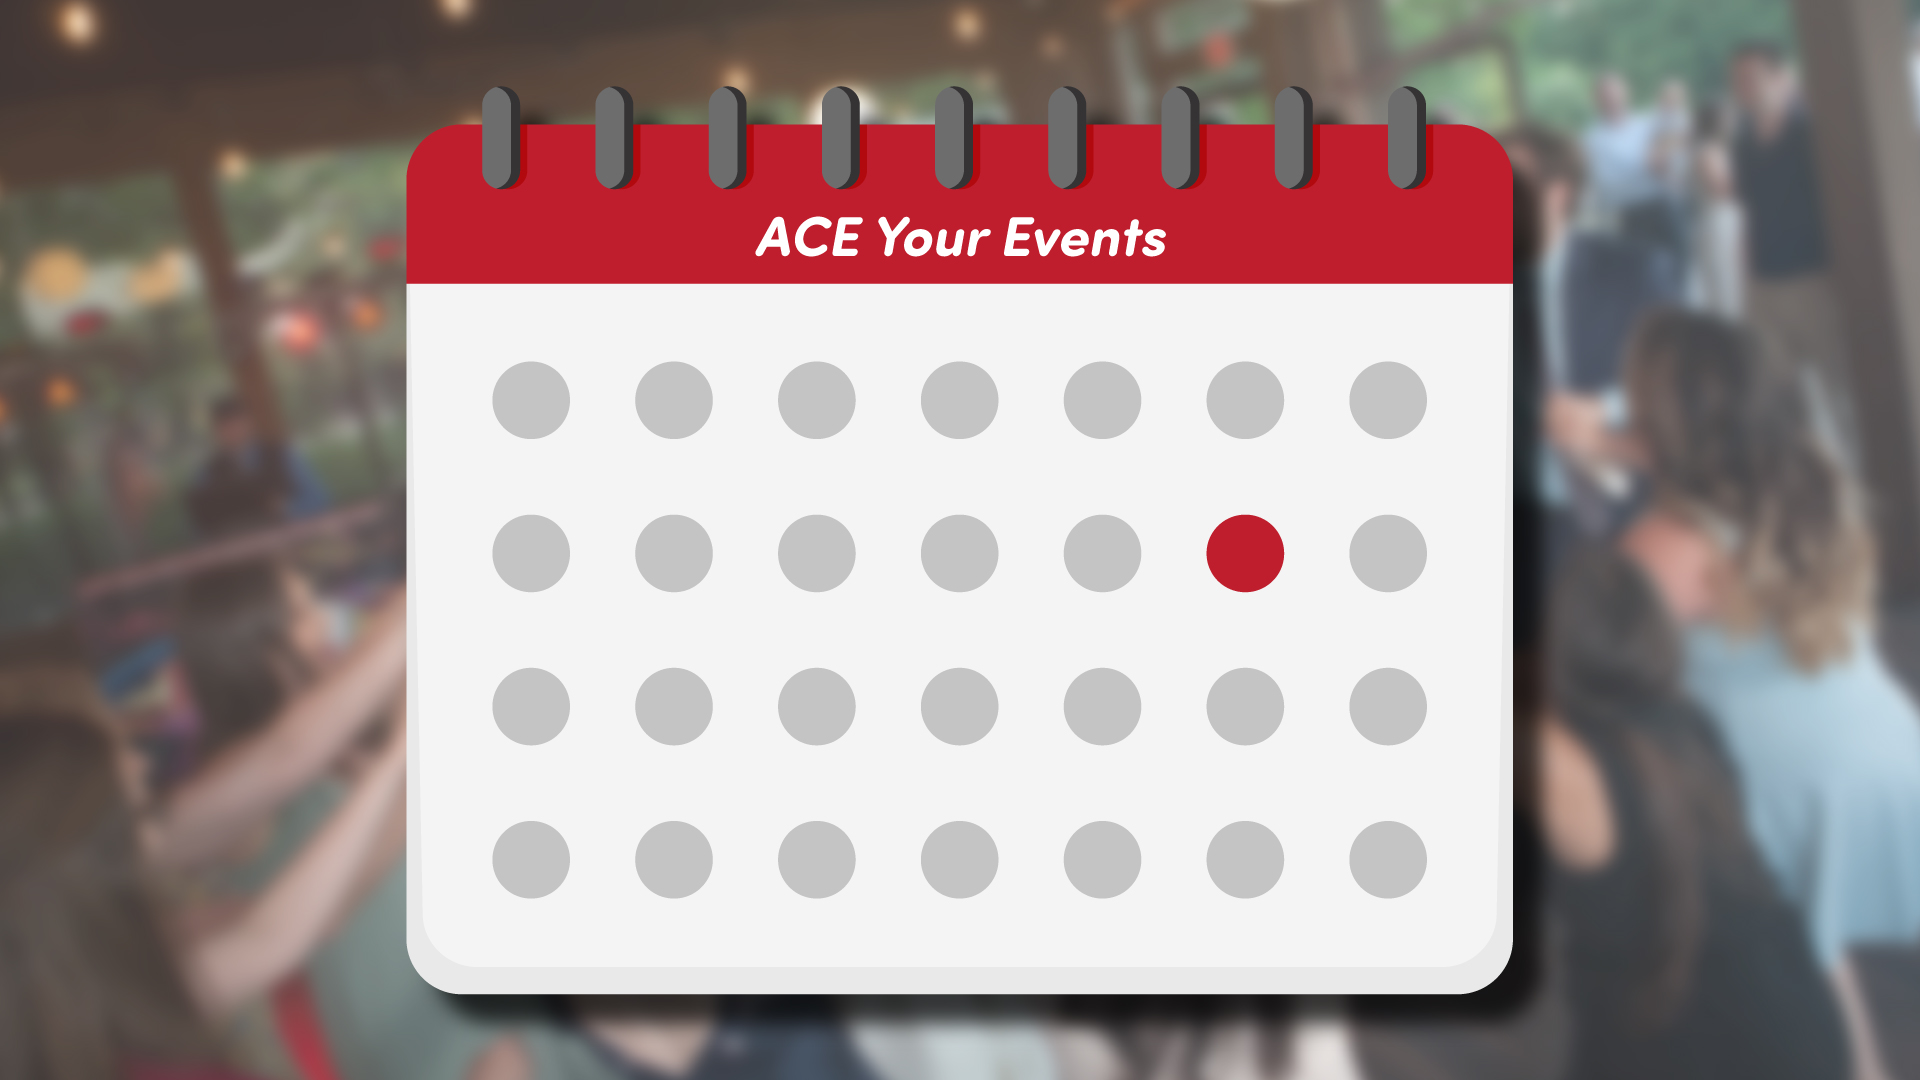 Ace your events calendar